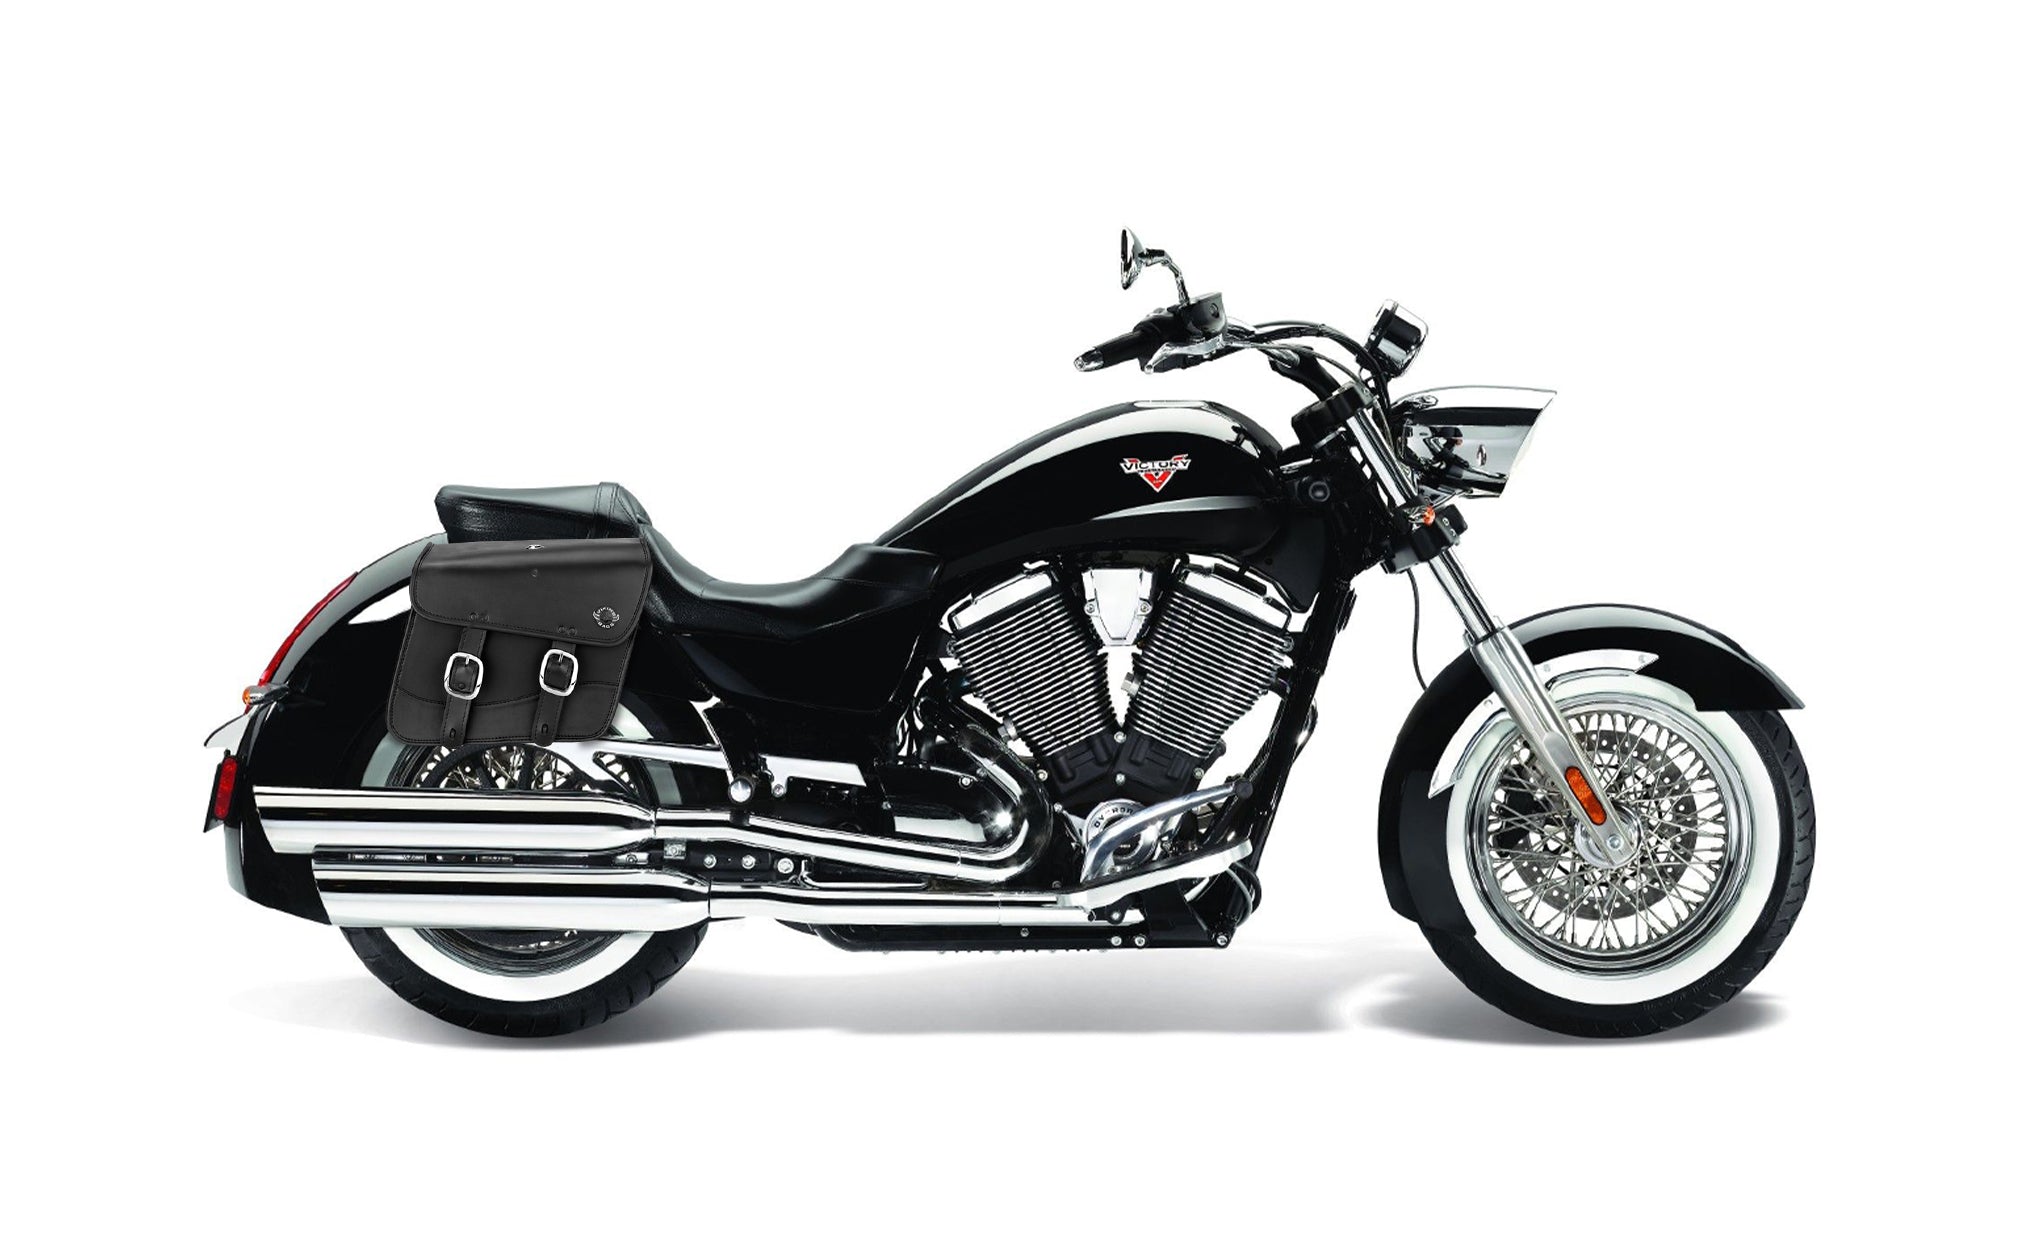 20L - Thor Medium Victory Boardwalk Leather Motorcycle Saddlebags on Bike Photo @expand